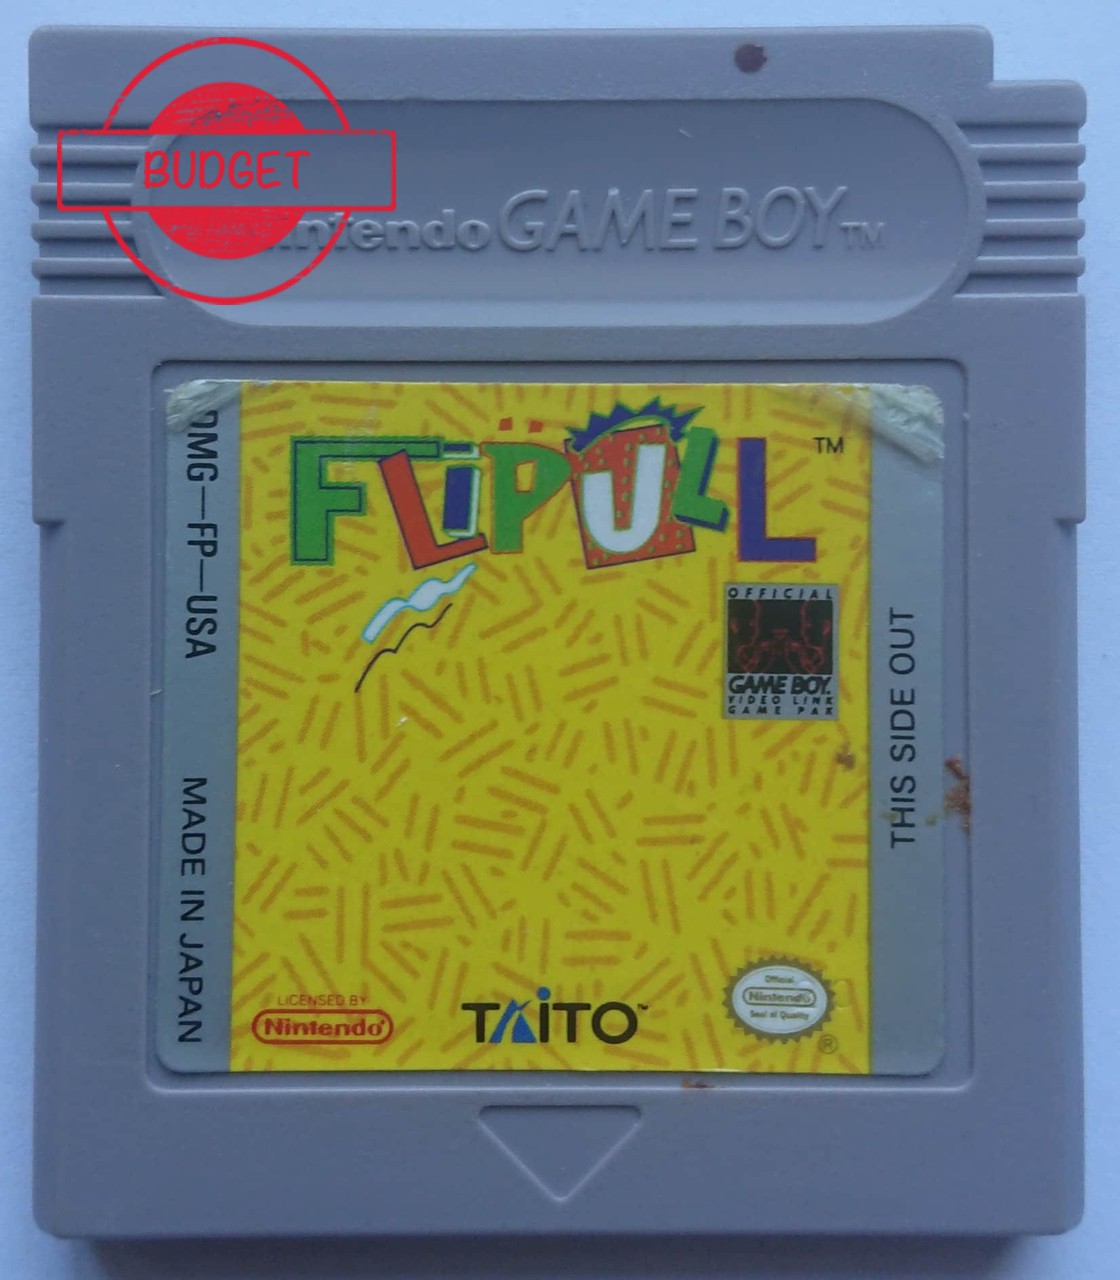 Flipull - Budget Kopen | Gameboy Classic Games